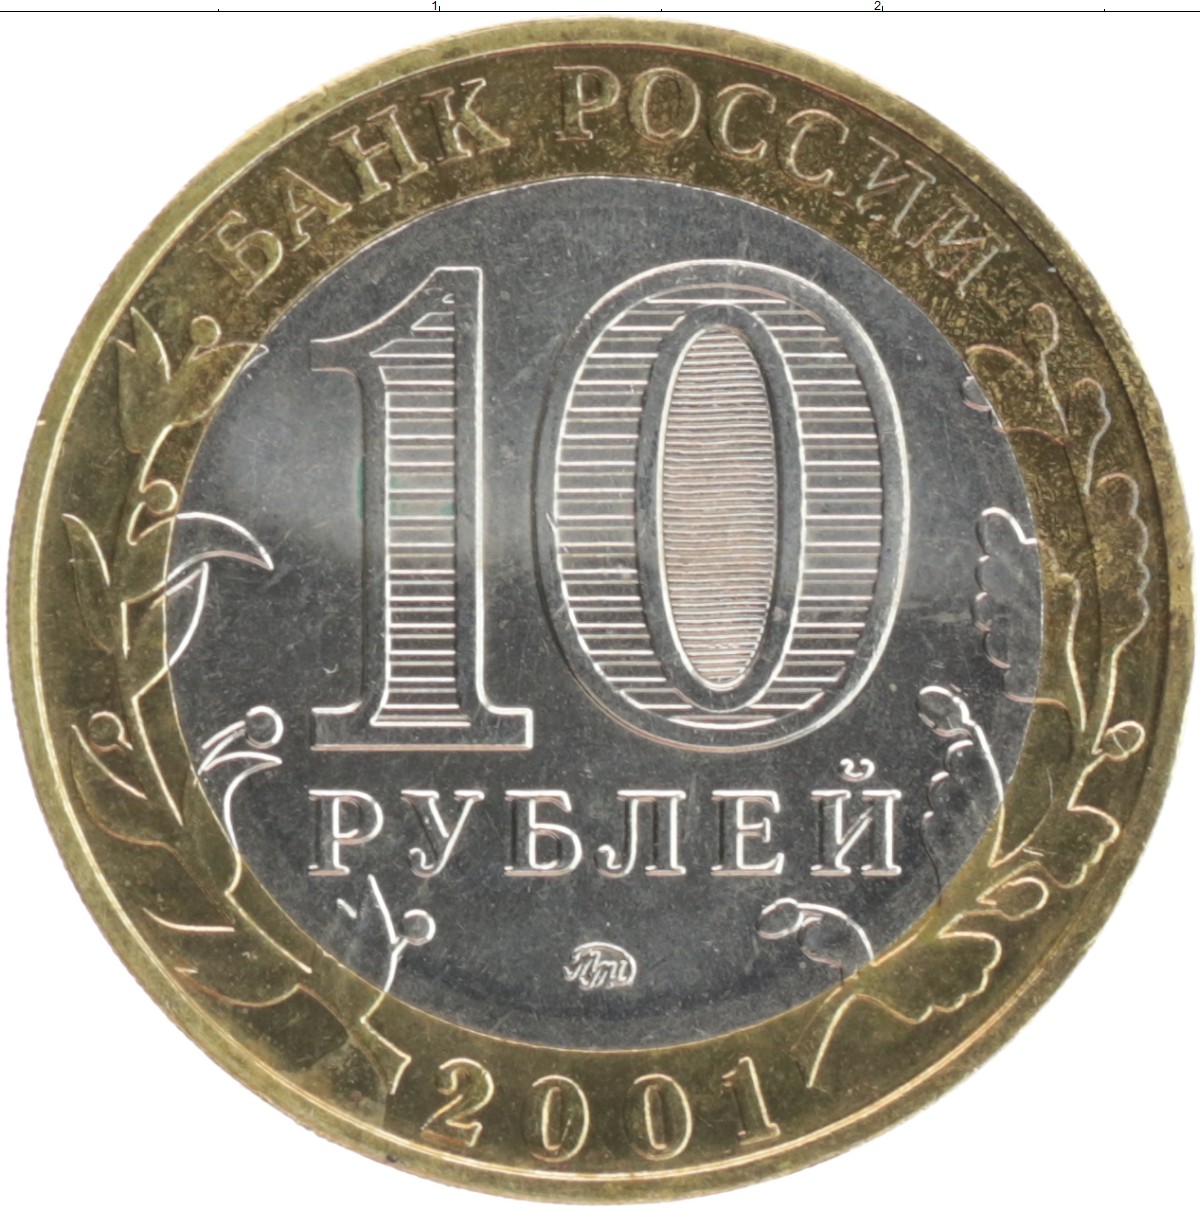 Steam рубли по 10 рублей фото 22